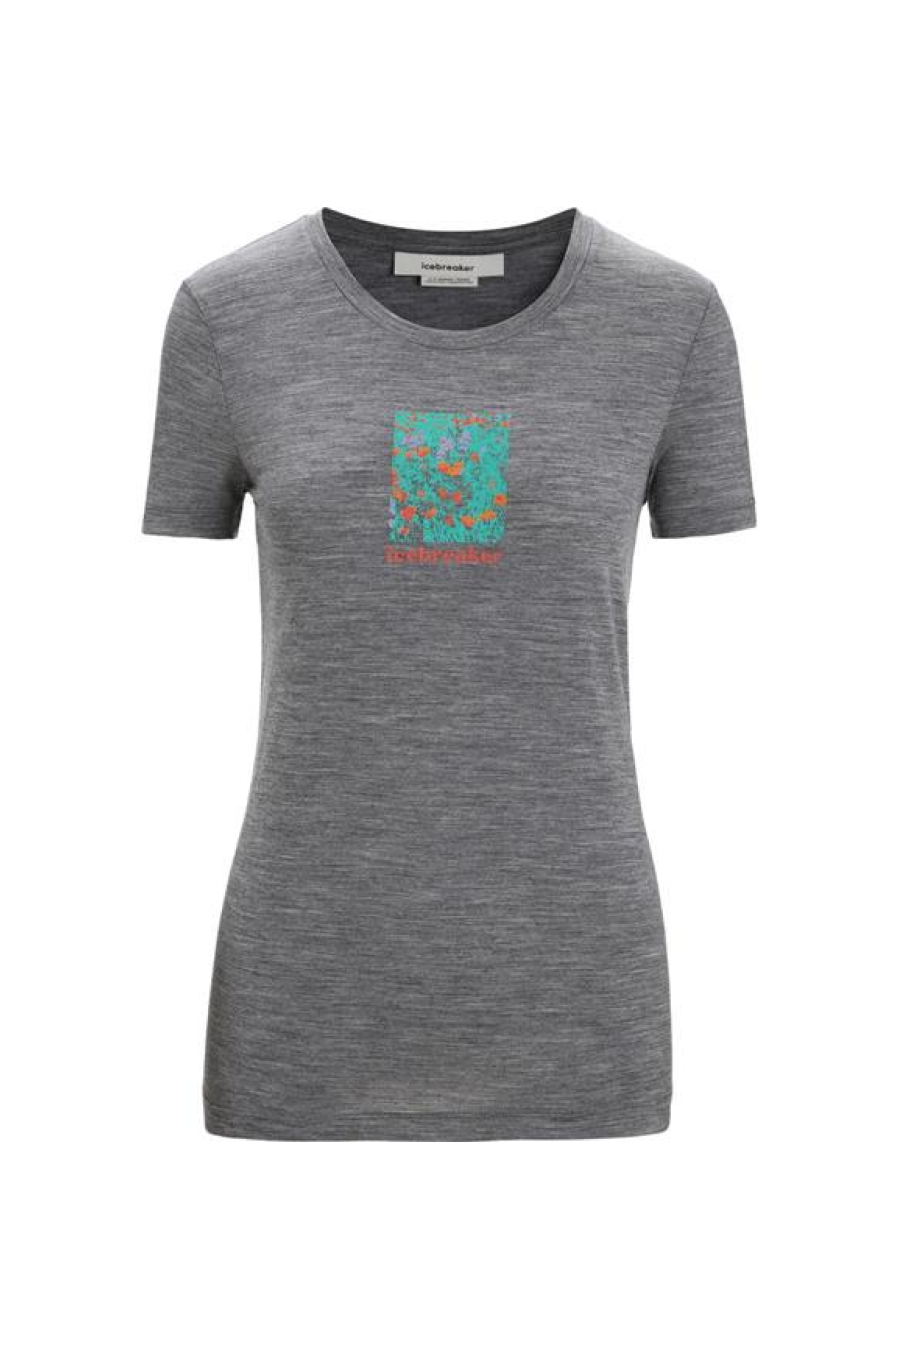 Women's Short-Sleeve Shirts – The Trail Shop